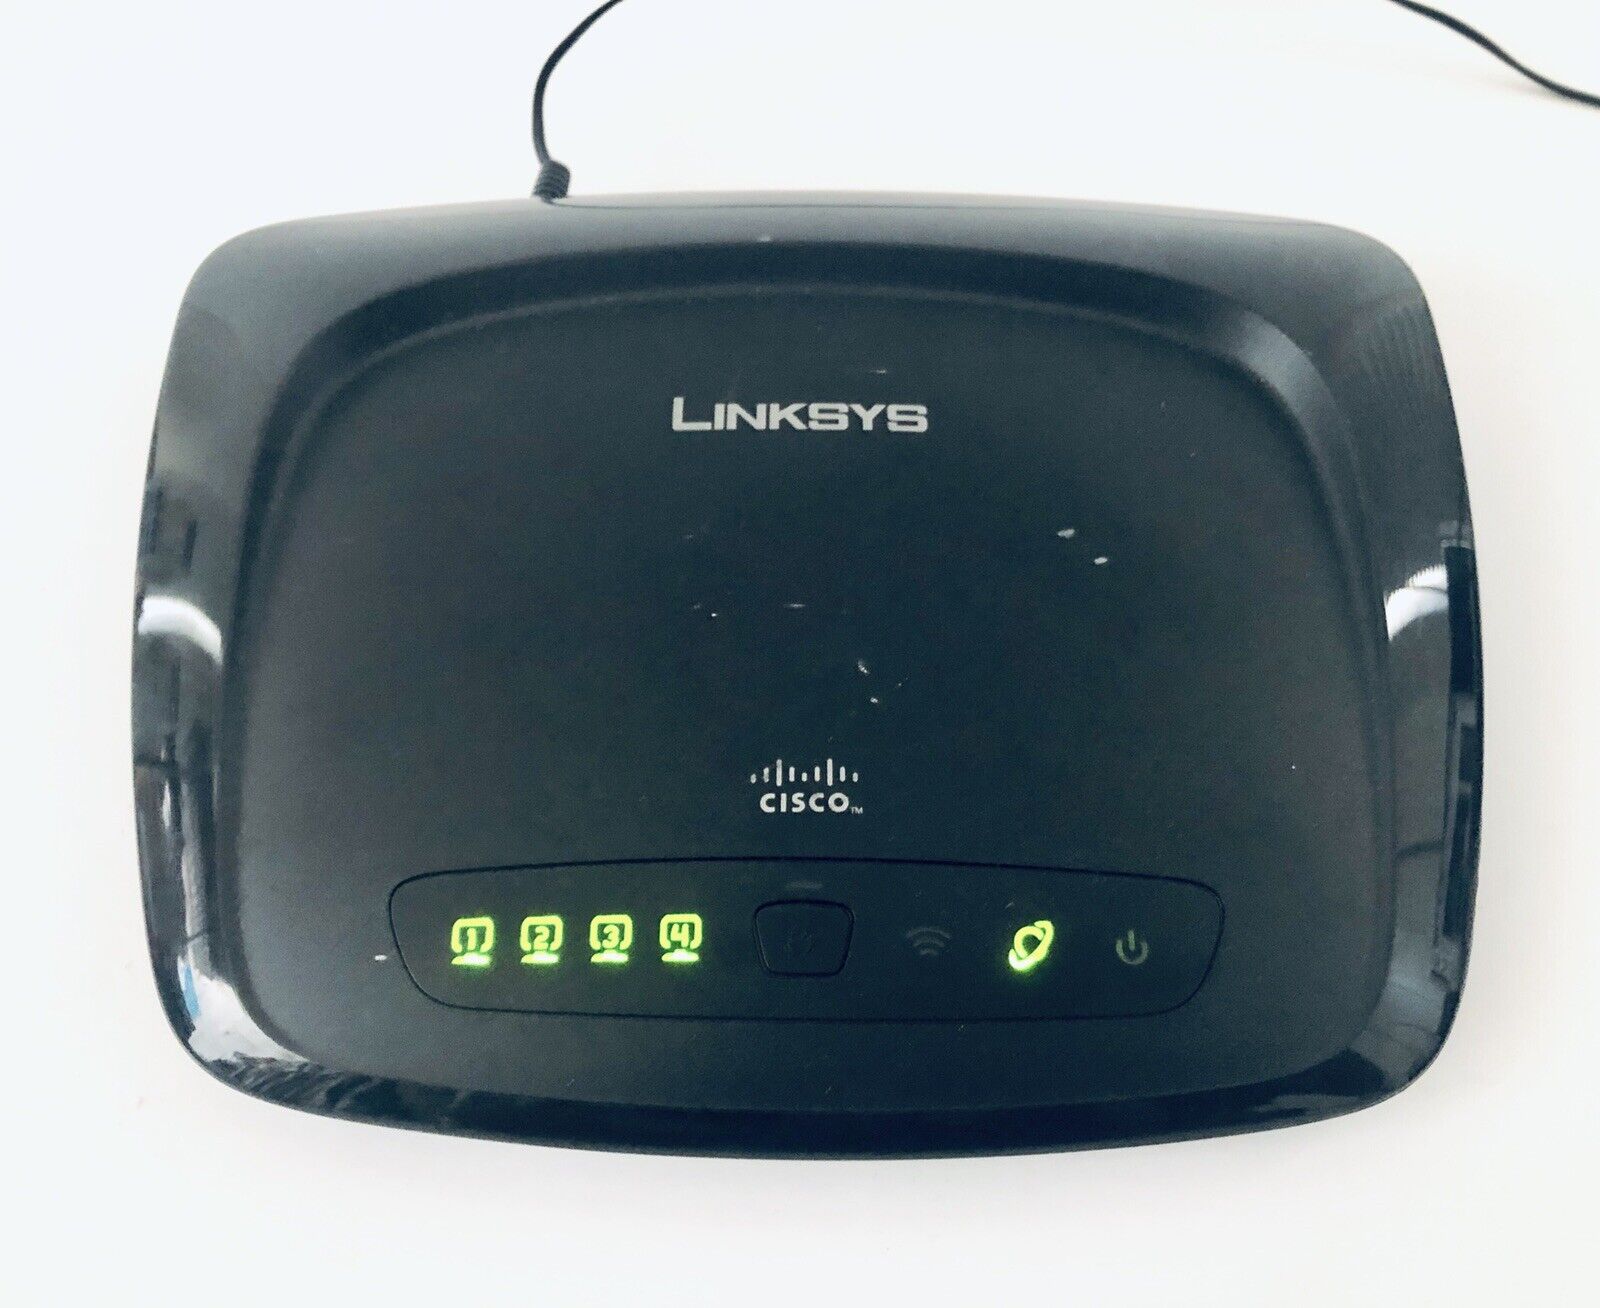 Cisco Linksys WRT54G2 V1 4-Port Wireless G Broadband Router Working Perfectly